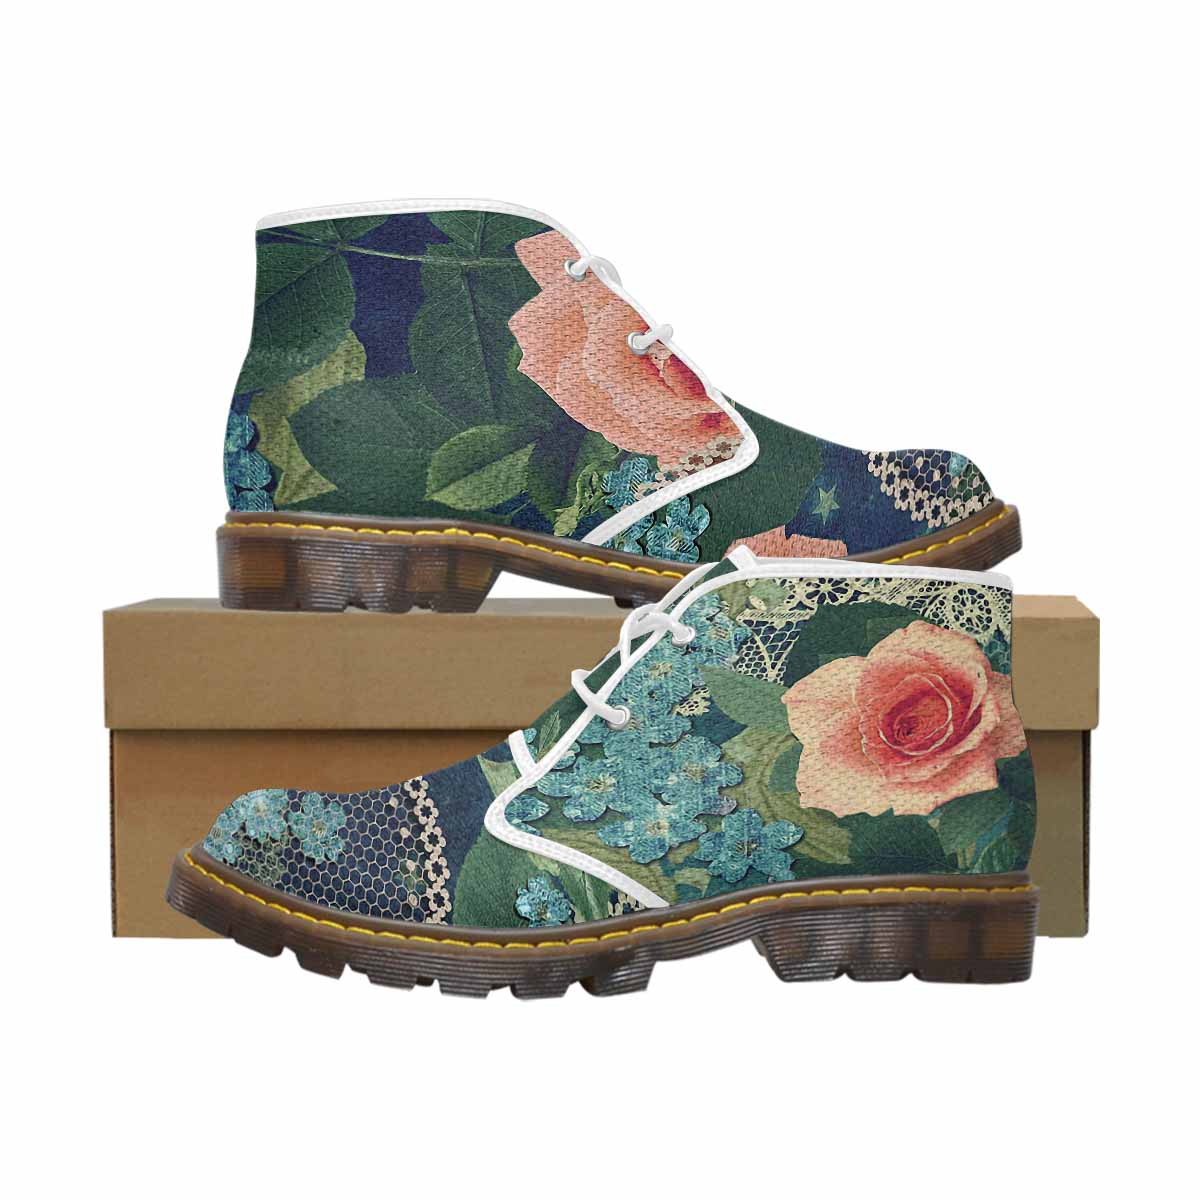 Lace Print, Cute comfy womens Chukka boots, design 01